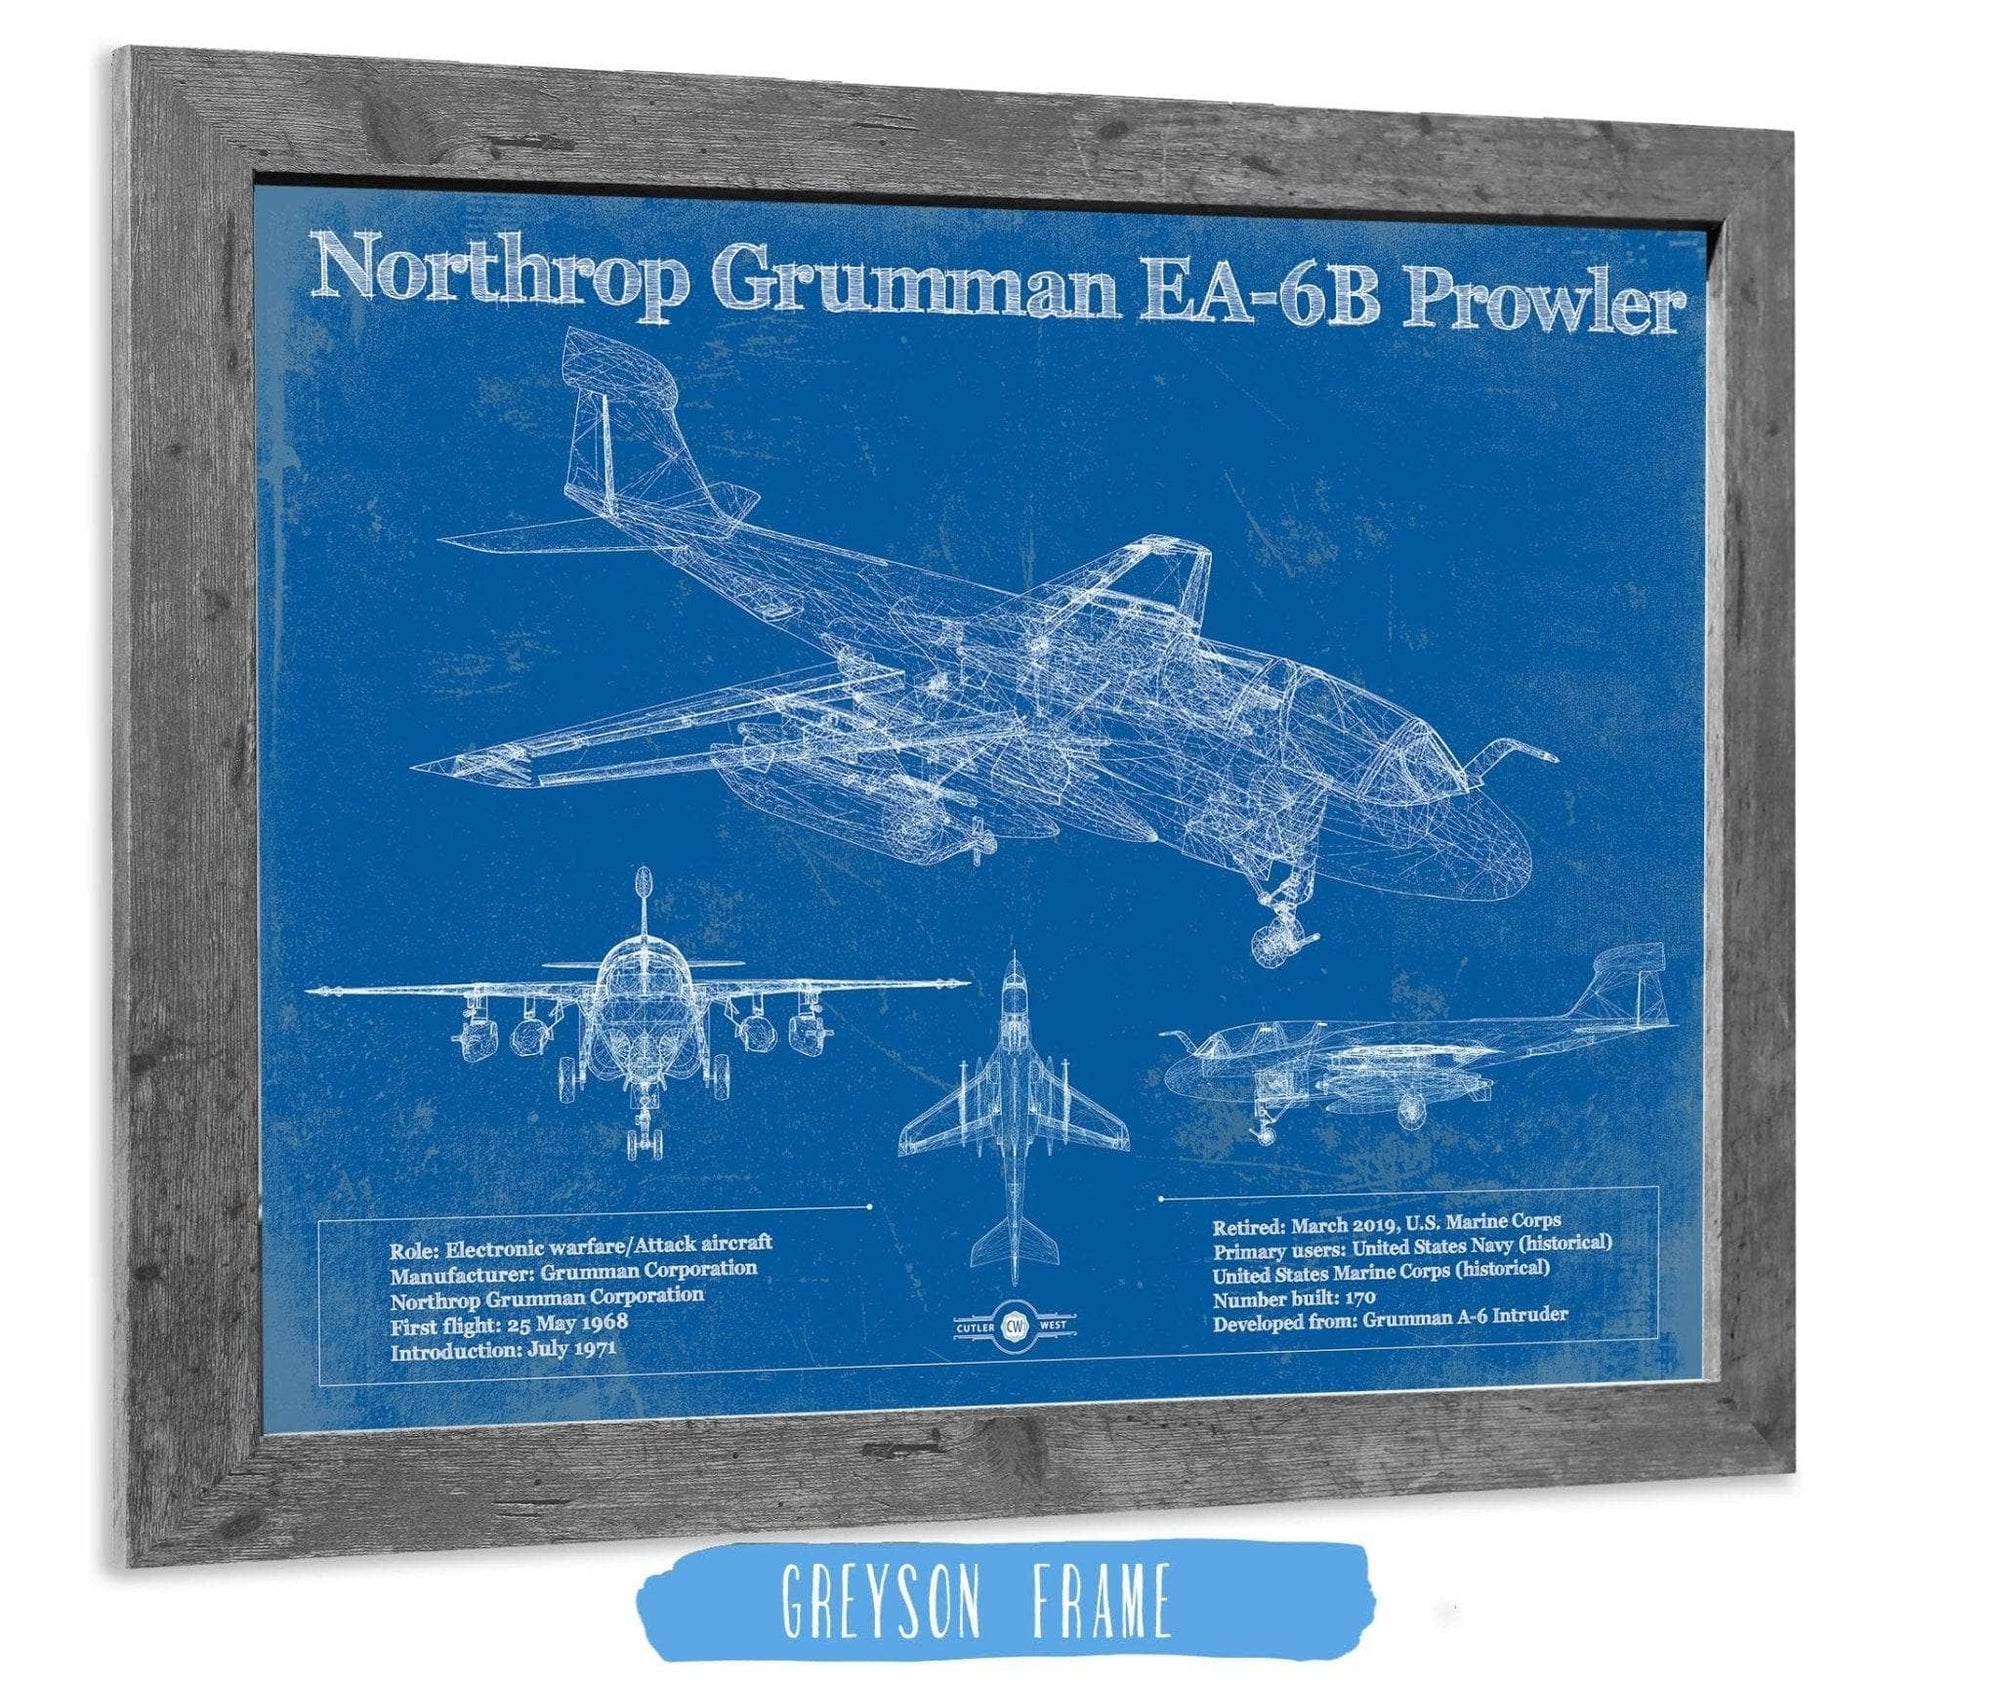 Cutler West Military Aircraft 14" x 11" / Greyson Frame Northrop Grumman EA-6B Prowler Patent Blueprint Original Military Wall Art 933311027_15441